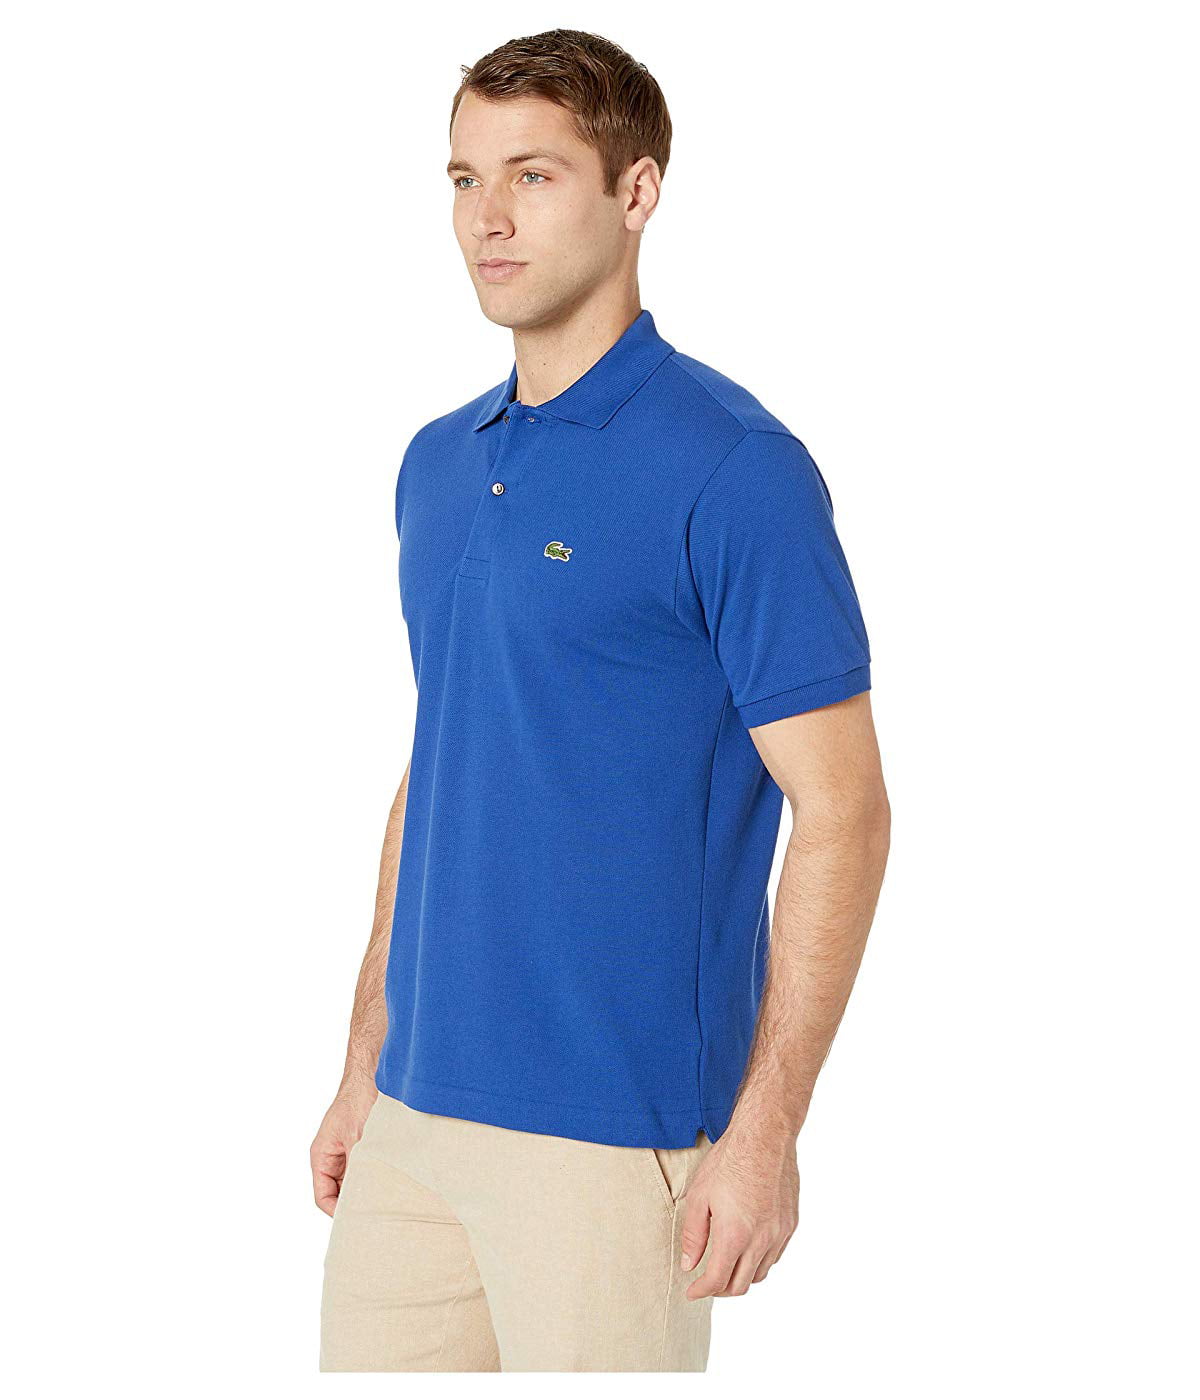 Lacoste Short Sleeve Classic Pique Polo Shirt Captain - Walmart.com